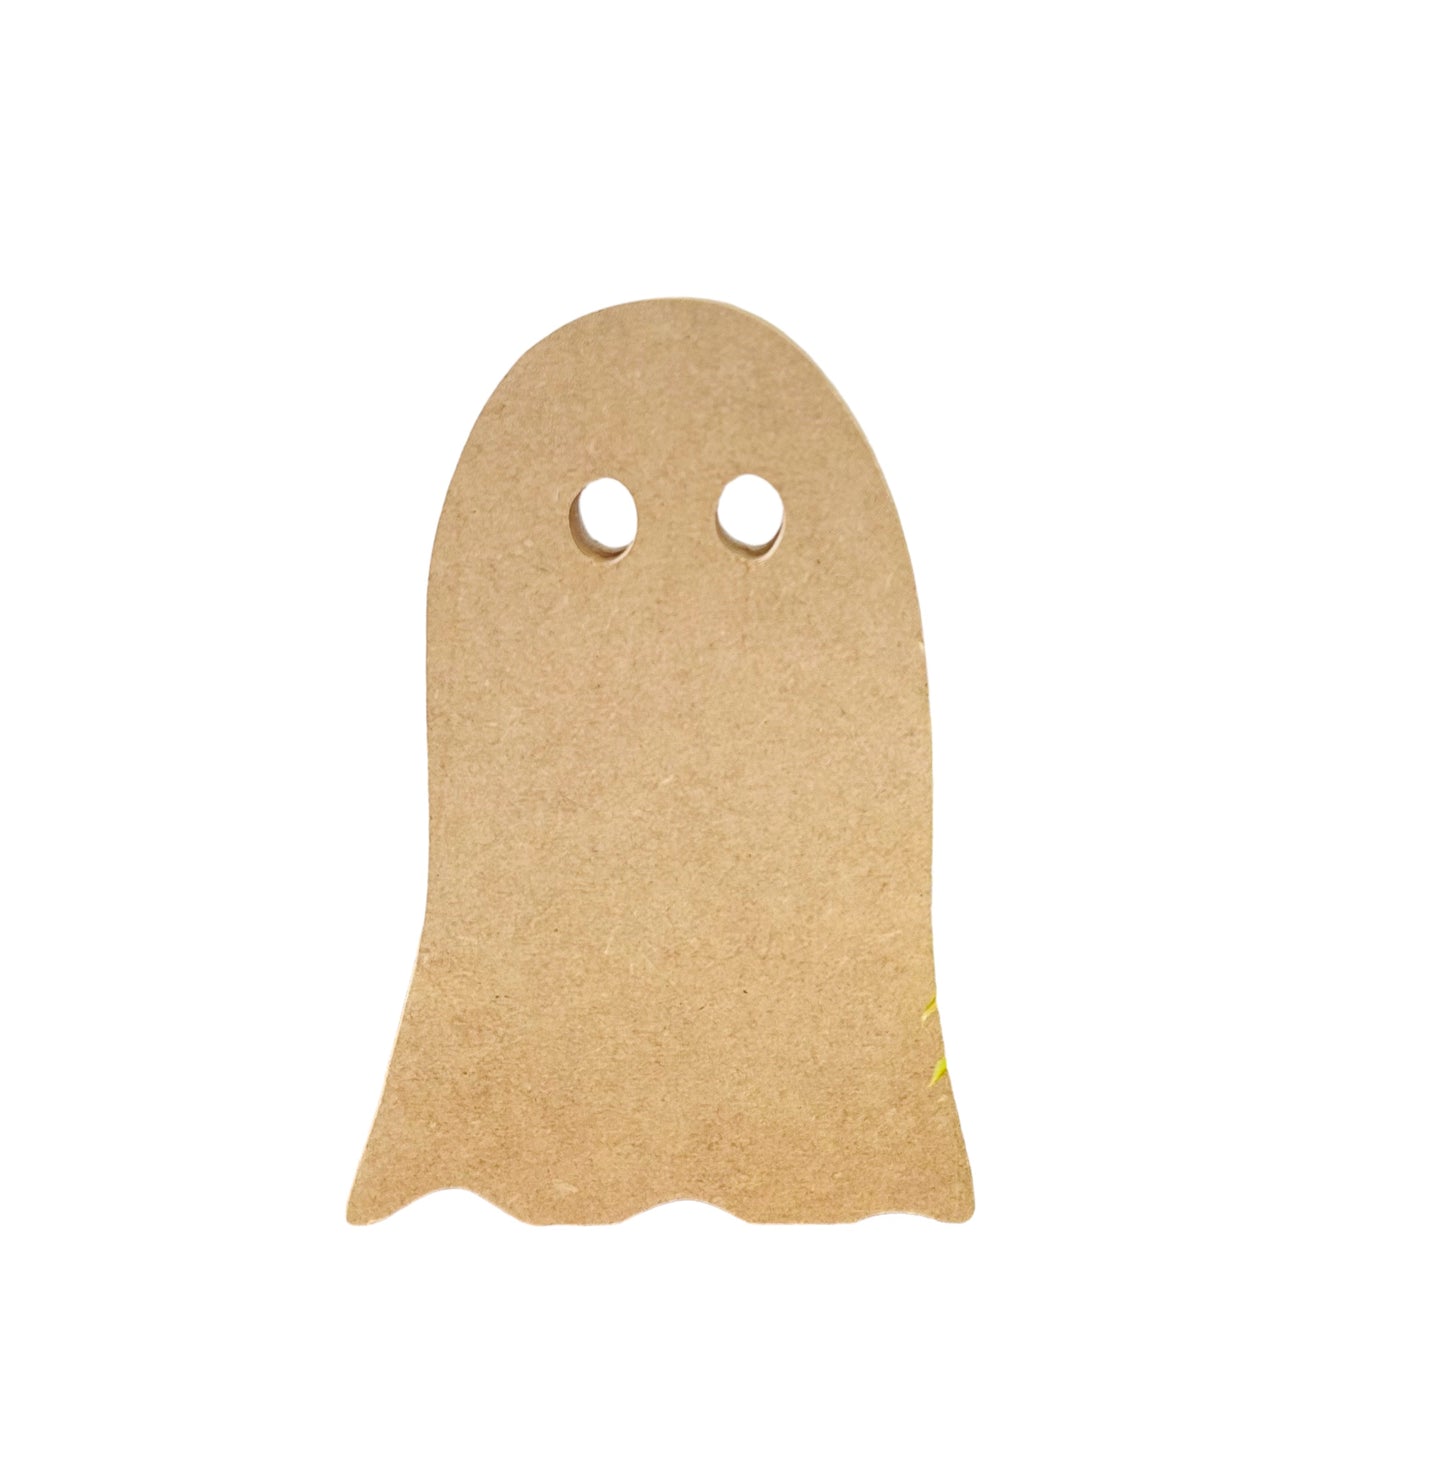 Primitive Wood Halloween Ghost Sitter